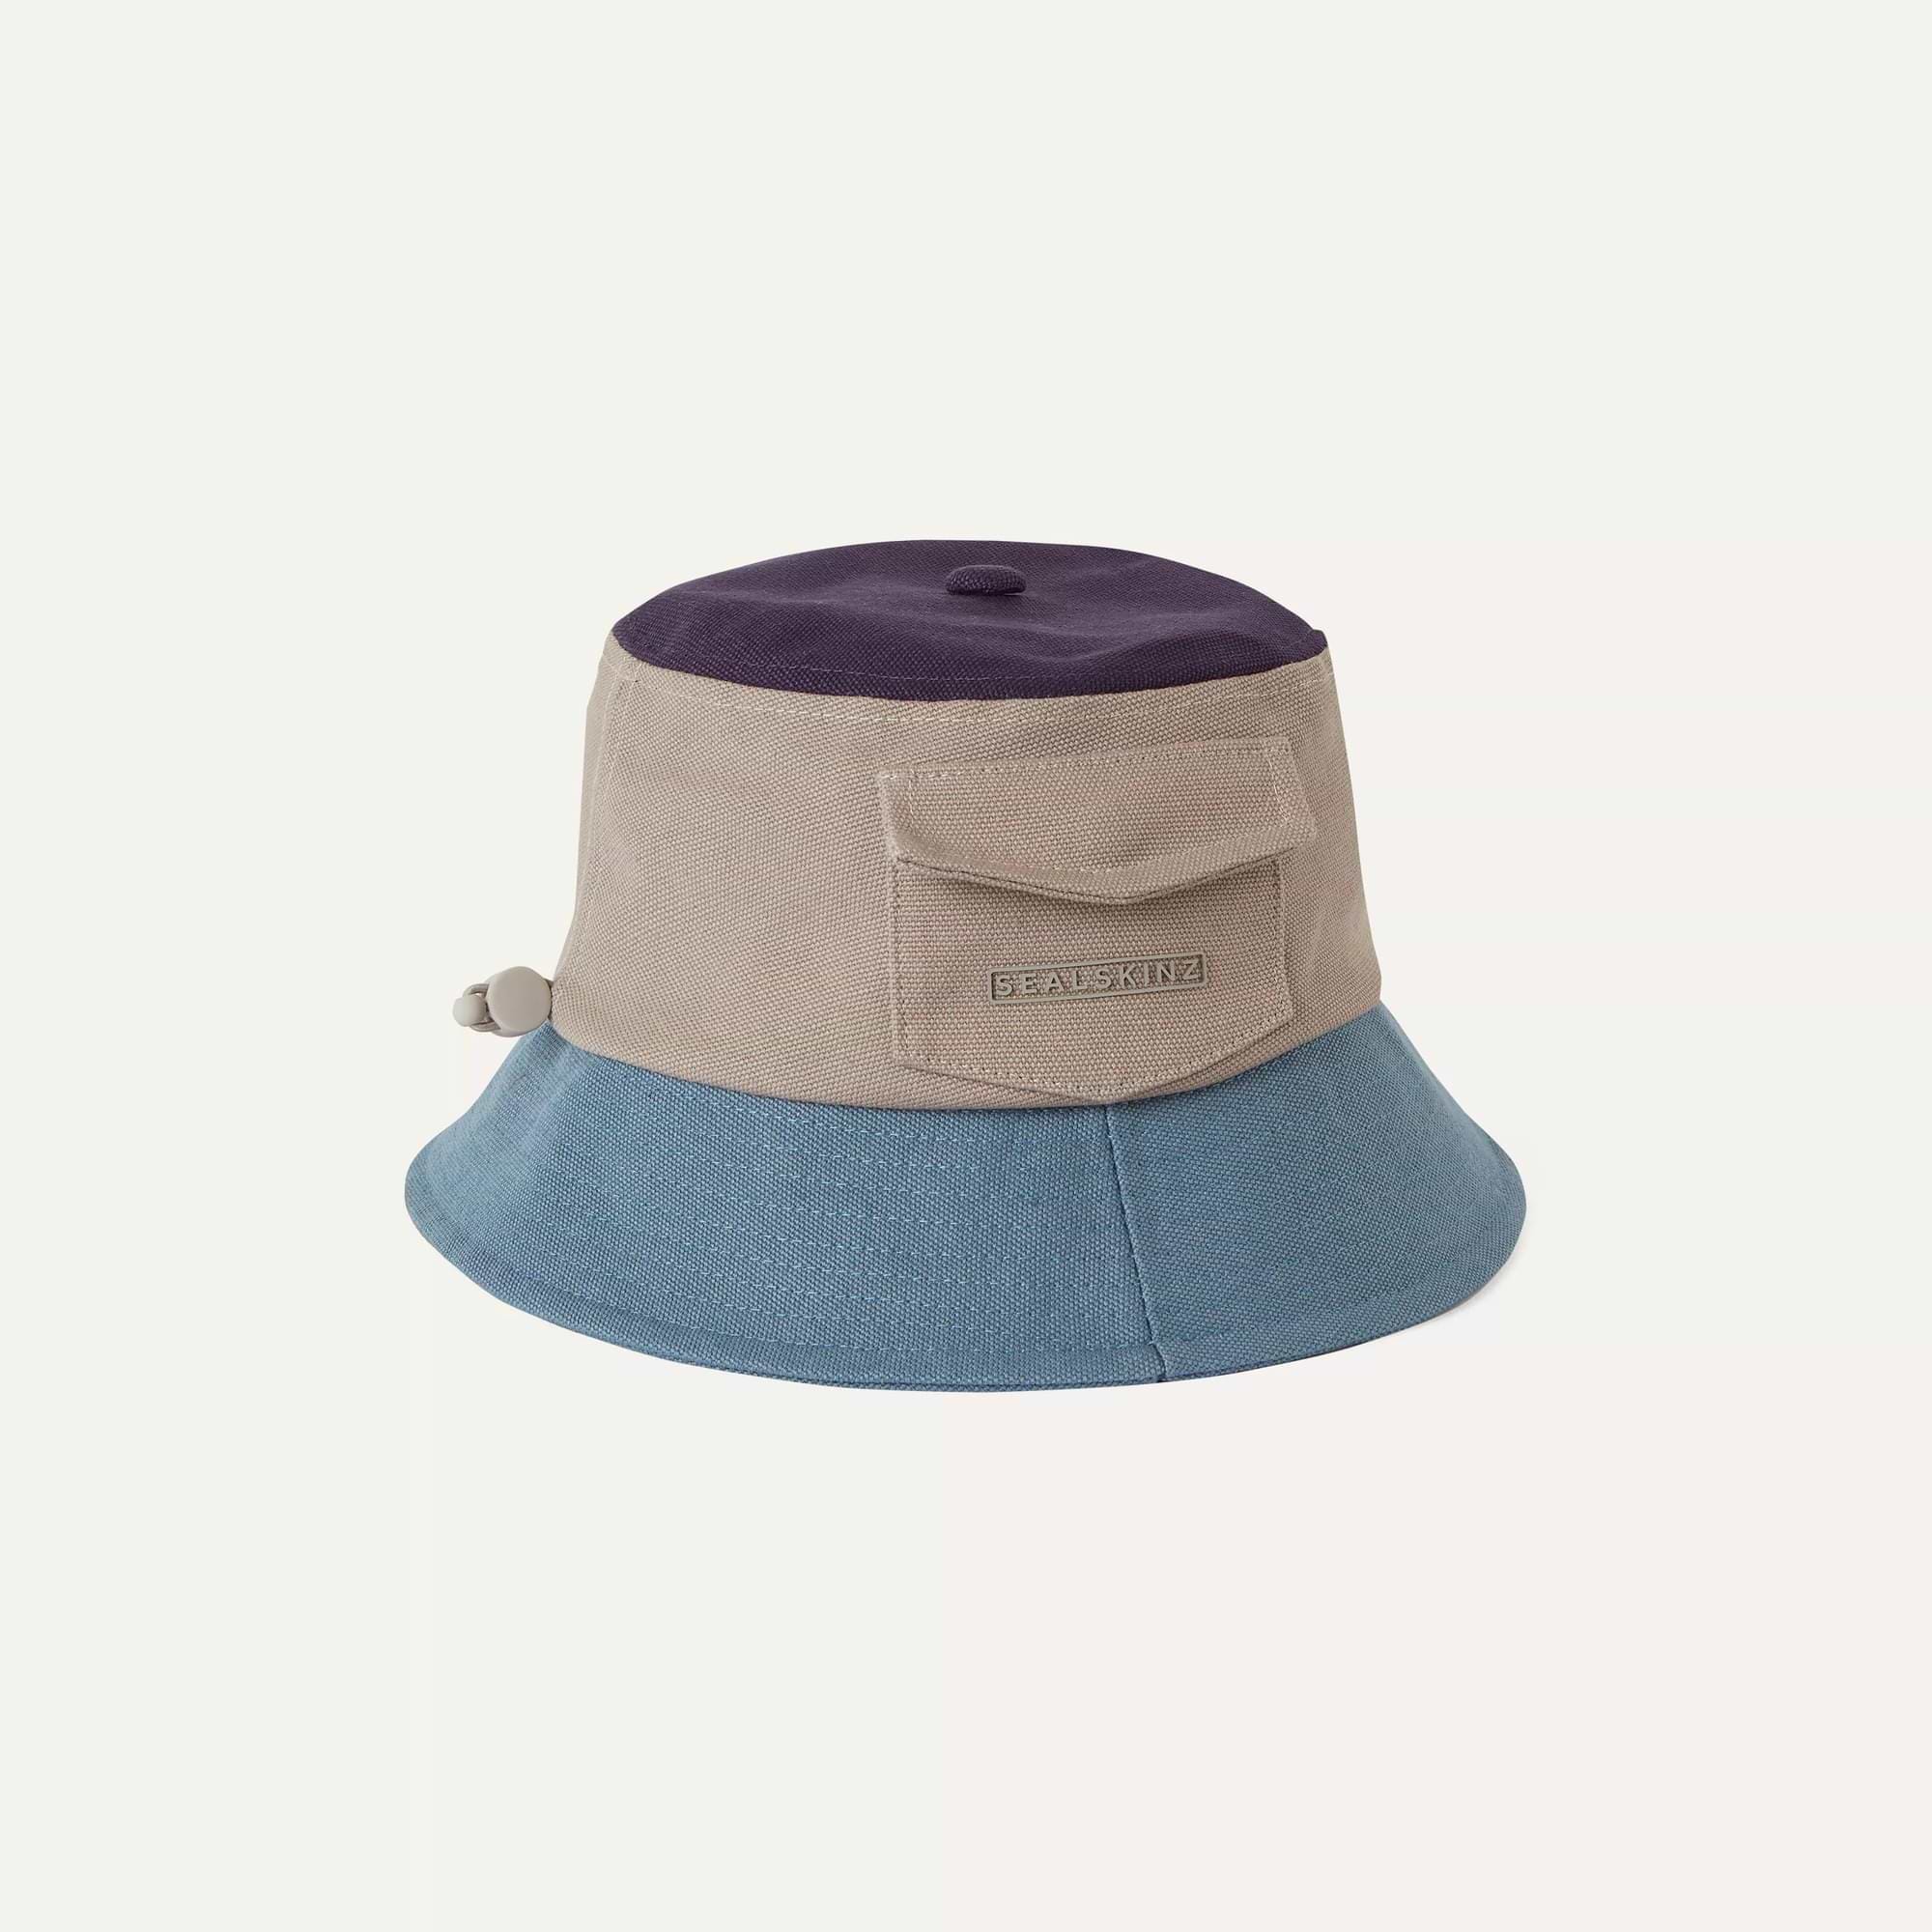 Sealskinz Waterproof Bucket Hat - Navy / Beige / Blue - S/M